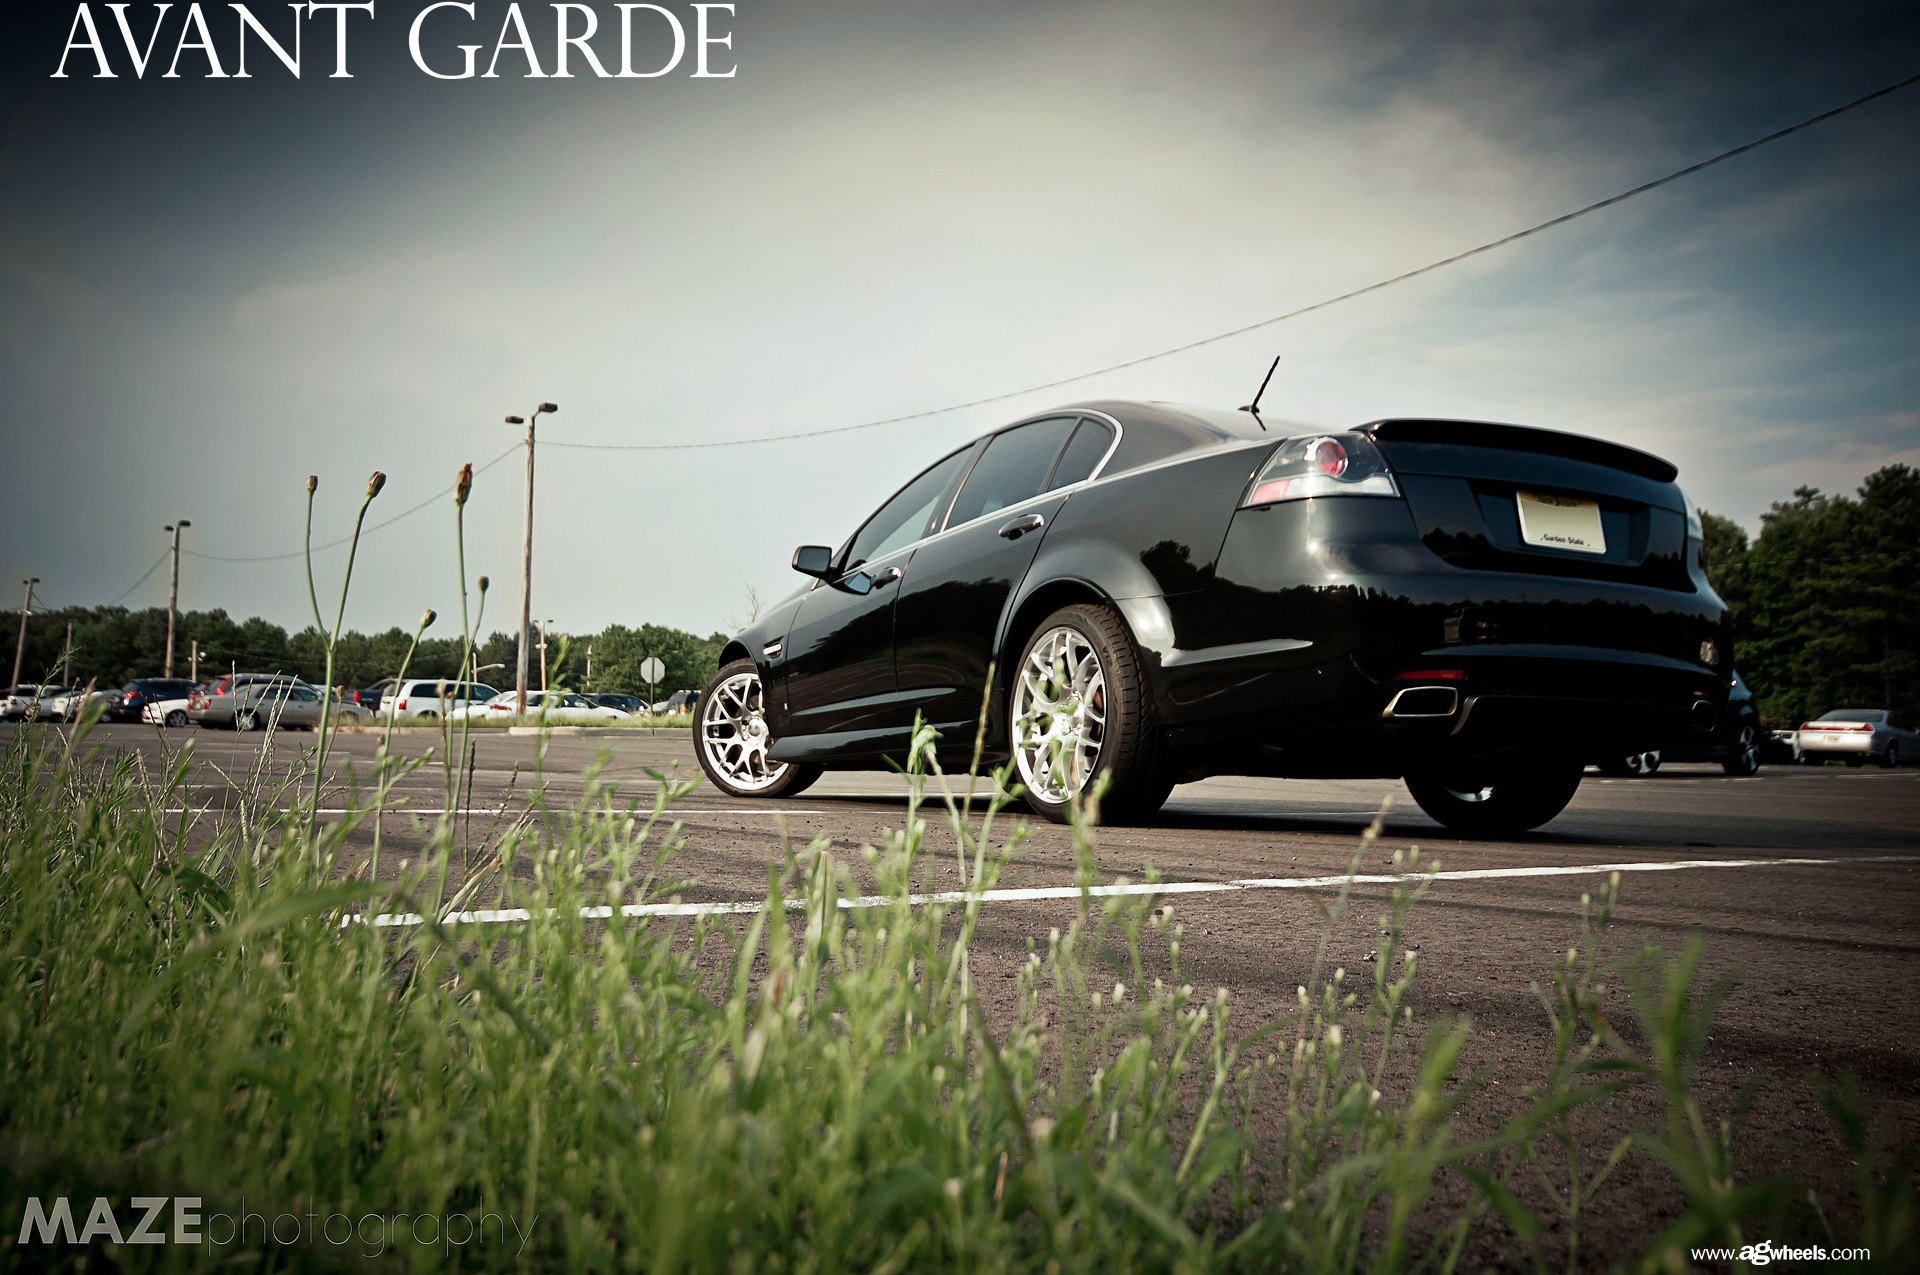 Factory Style Rear Spoiler on Black Pontiac G8 - Photo by Avant Garde Wheels